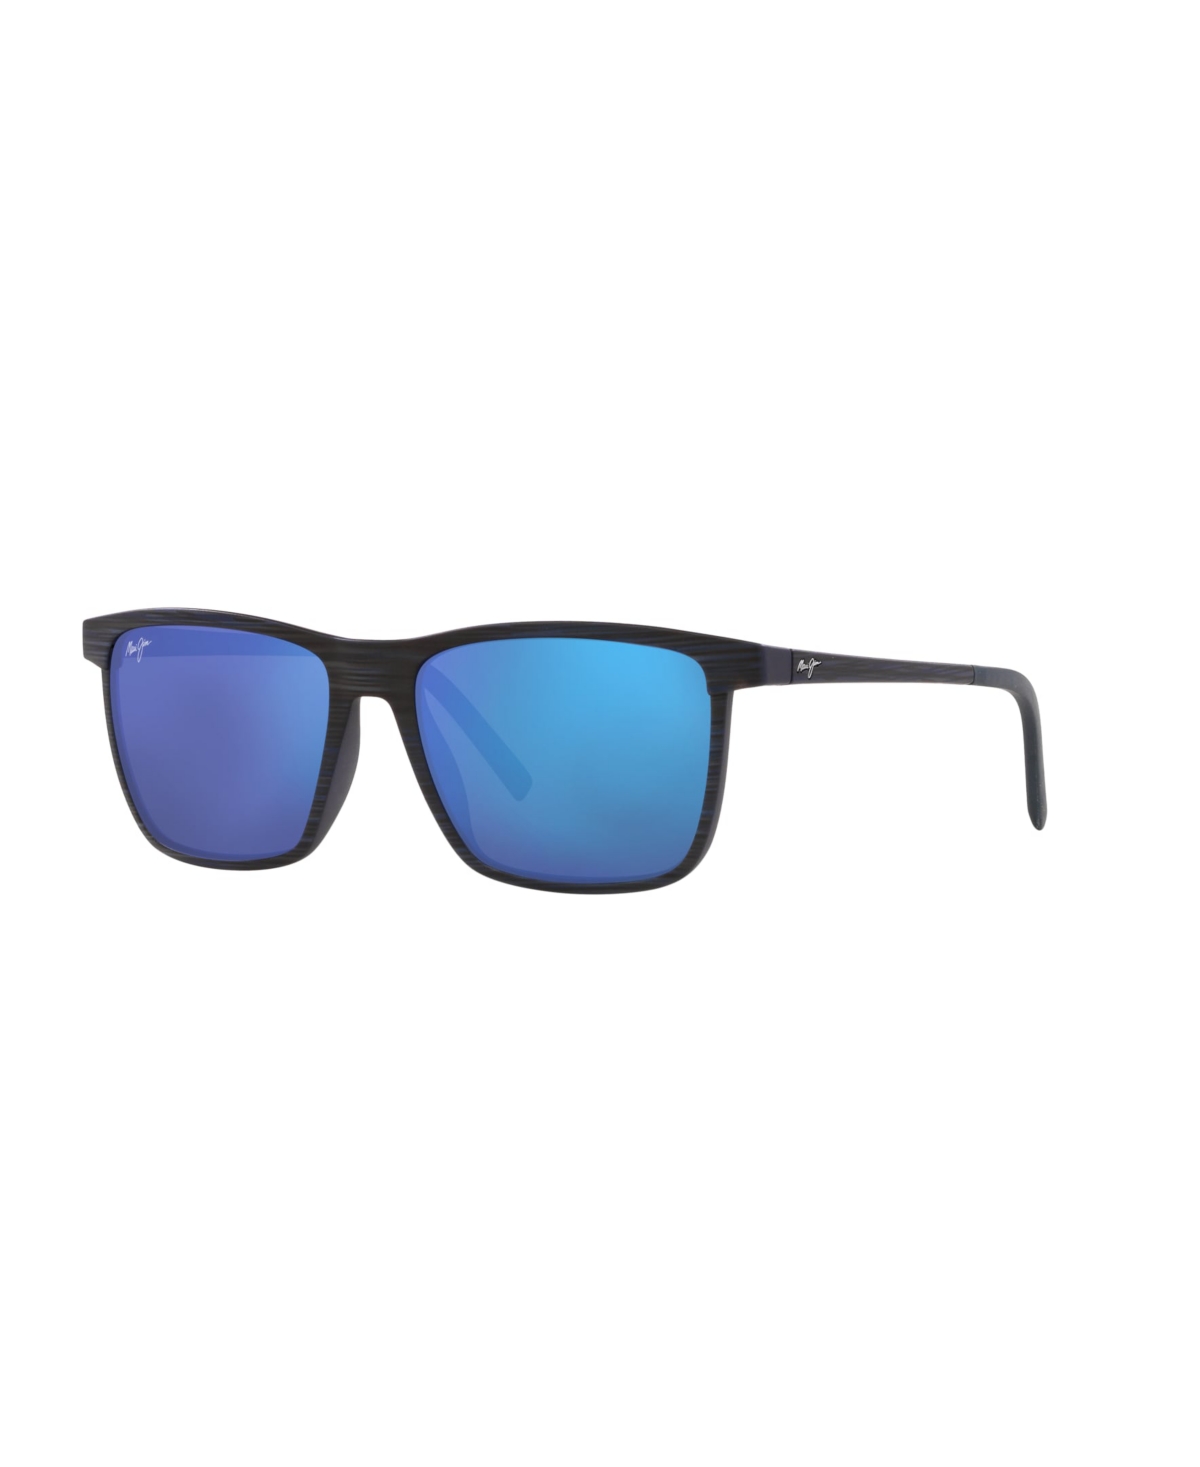 Maui Jim Unisex Polarized Sunglasses, One Way - Black Matte